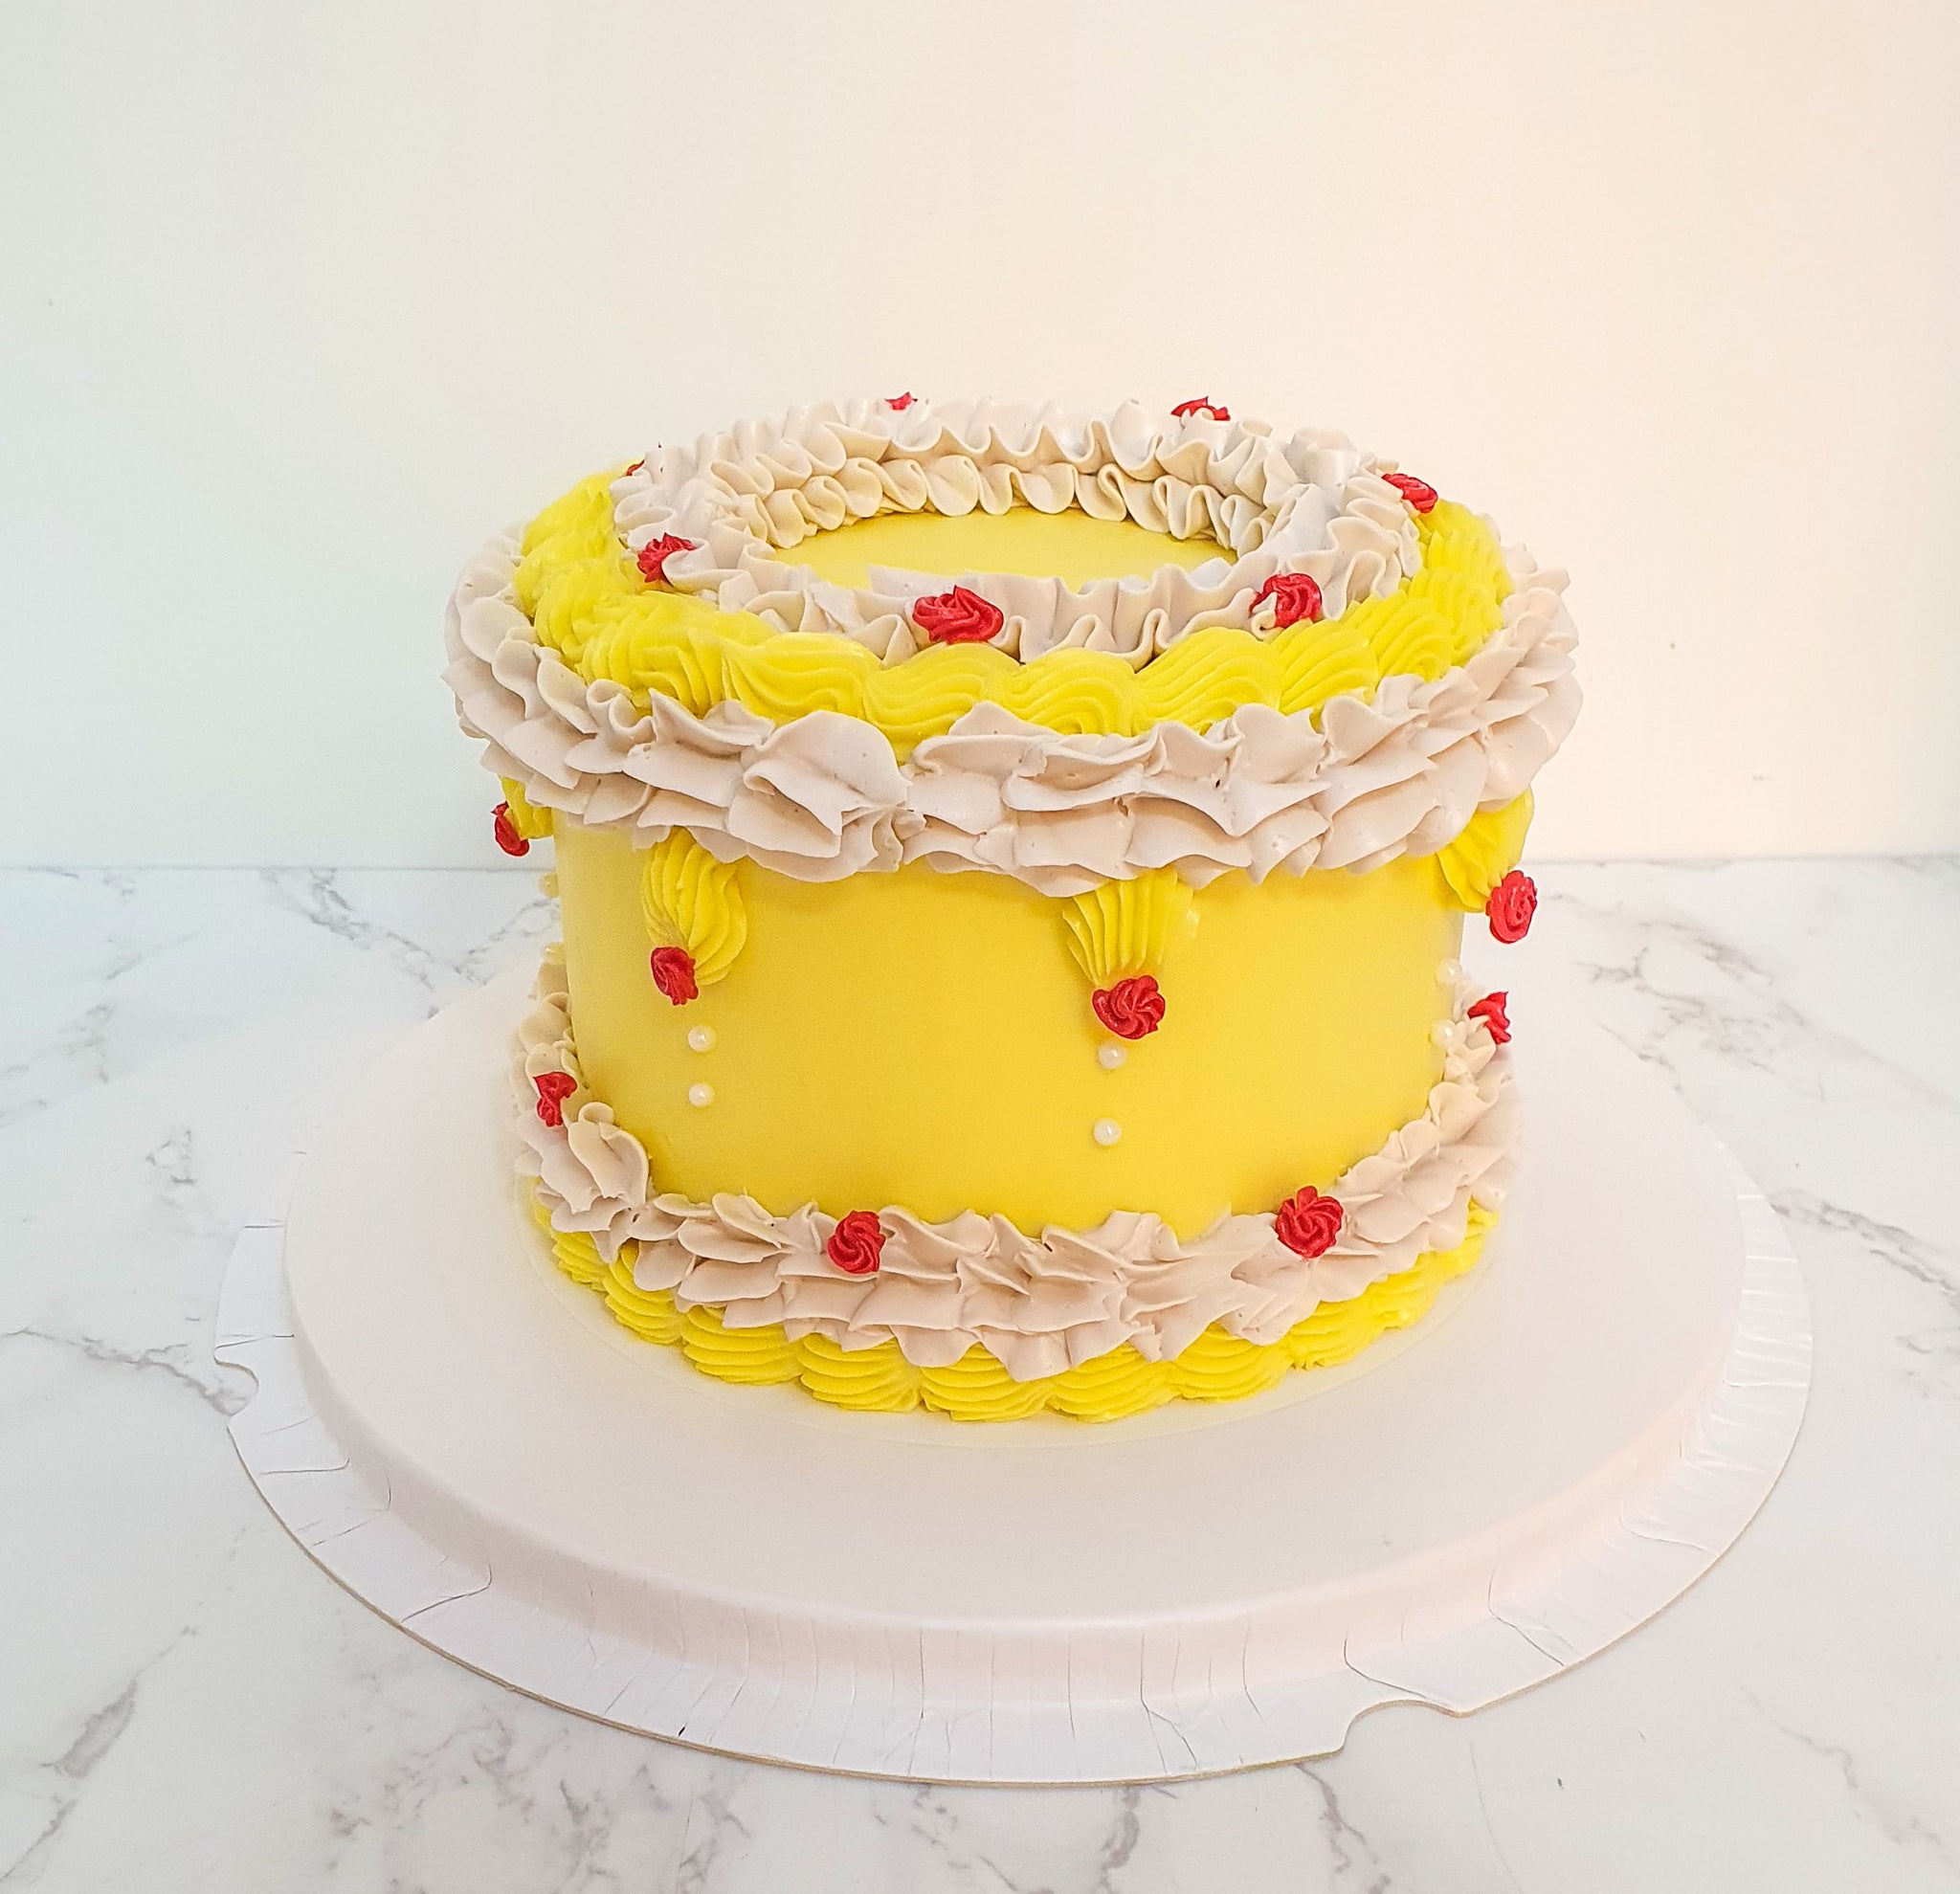 Kentucky Butter Cake - Once Upon a Chef (Bake-Off Winner!)